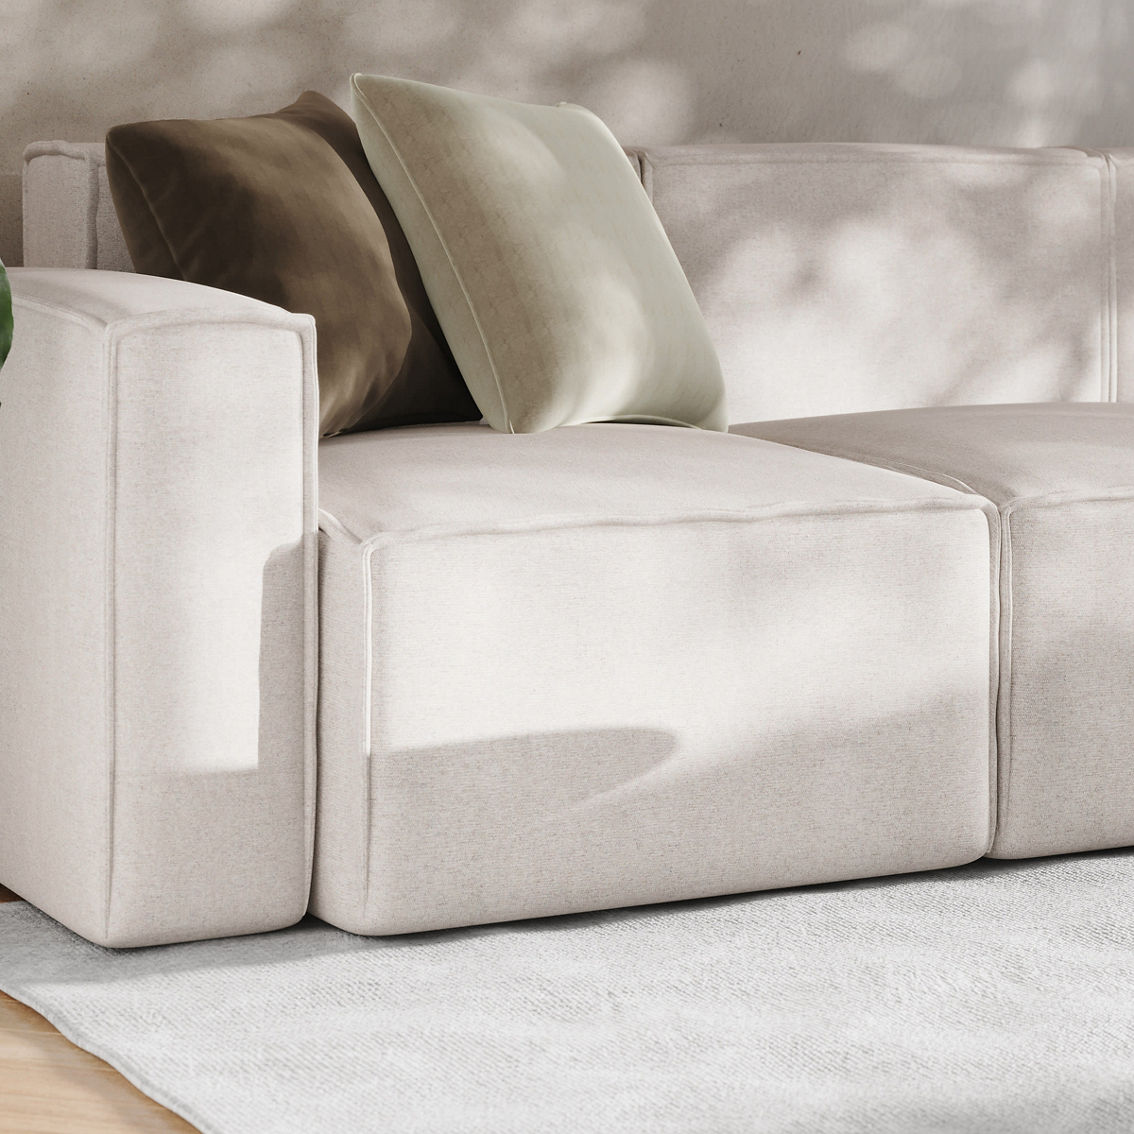 Flash Furniture 5 Piece Modular Sectional Sofa with Ottoman - Image 2 of 5